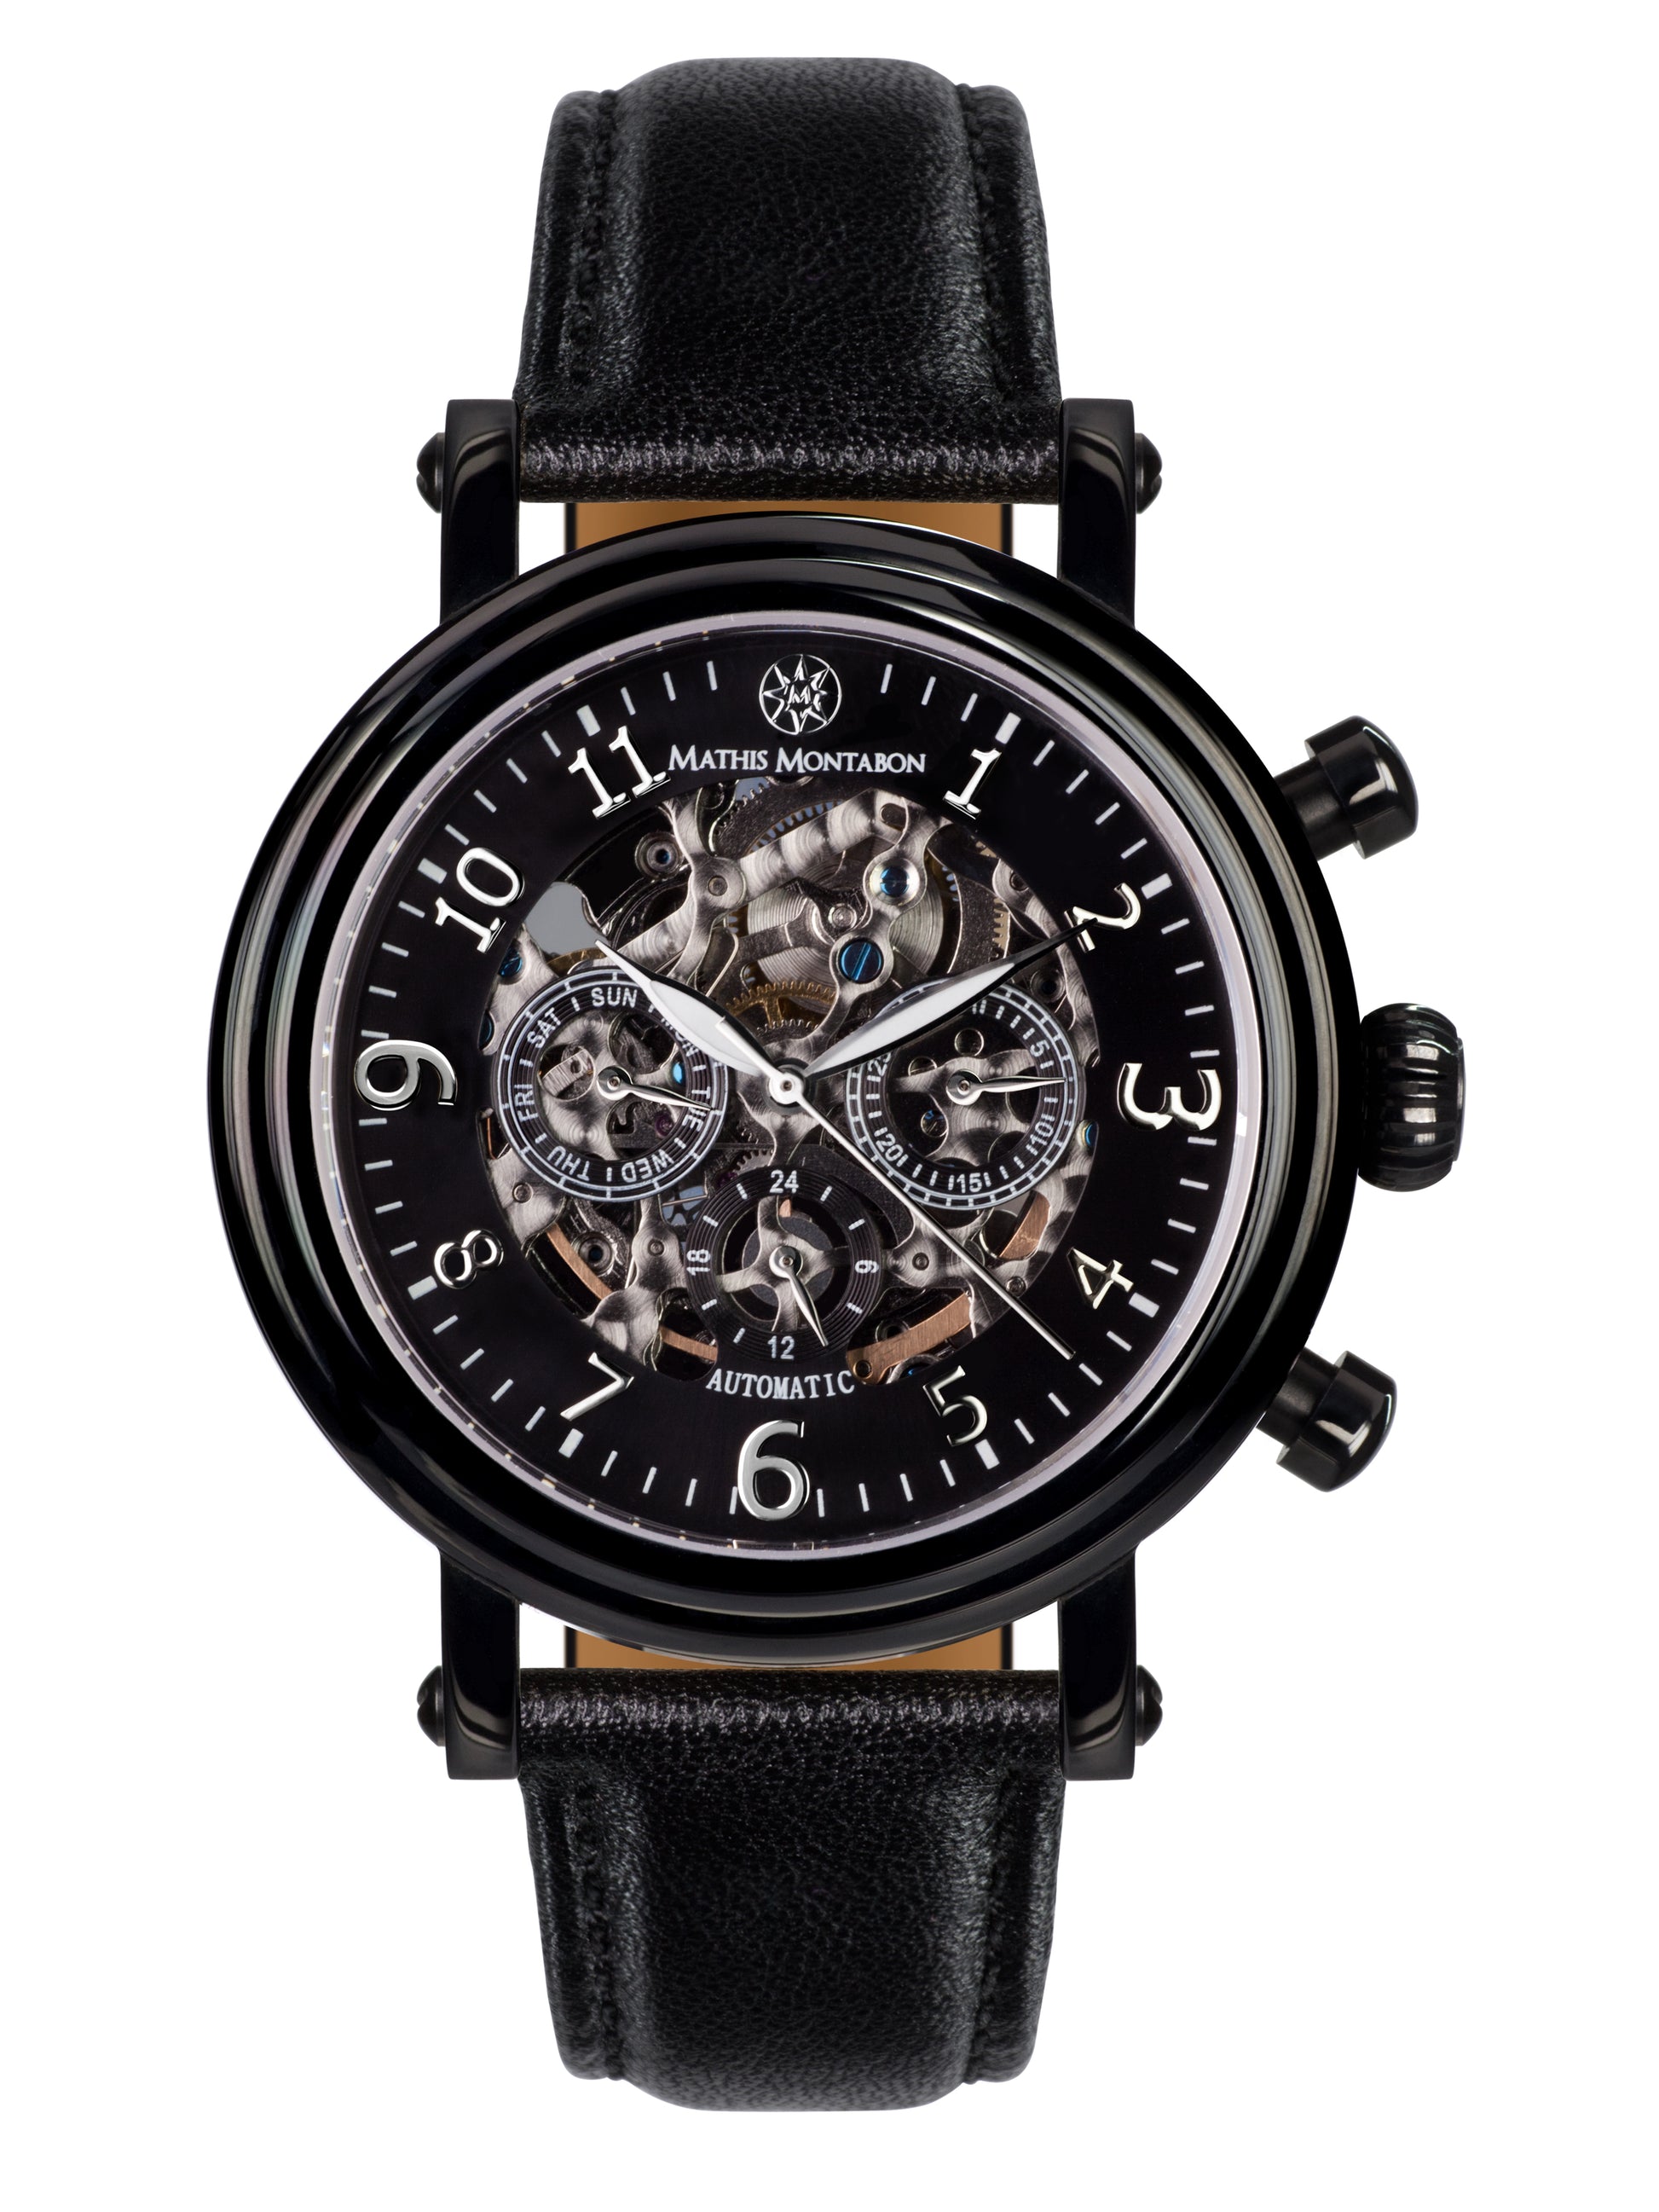 Automatic watches — Executive — Mathis Montabon — IP schwarz